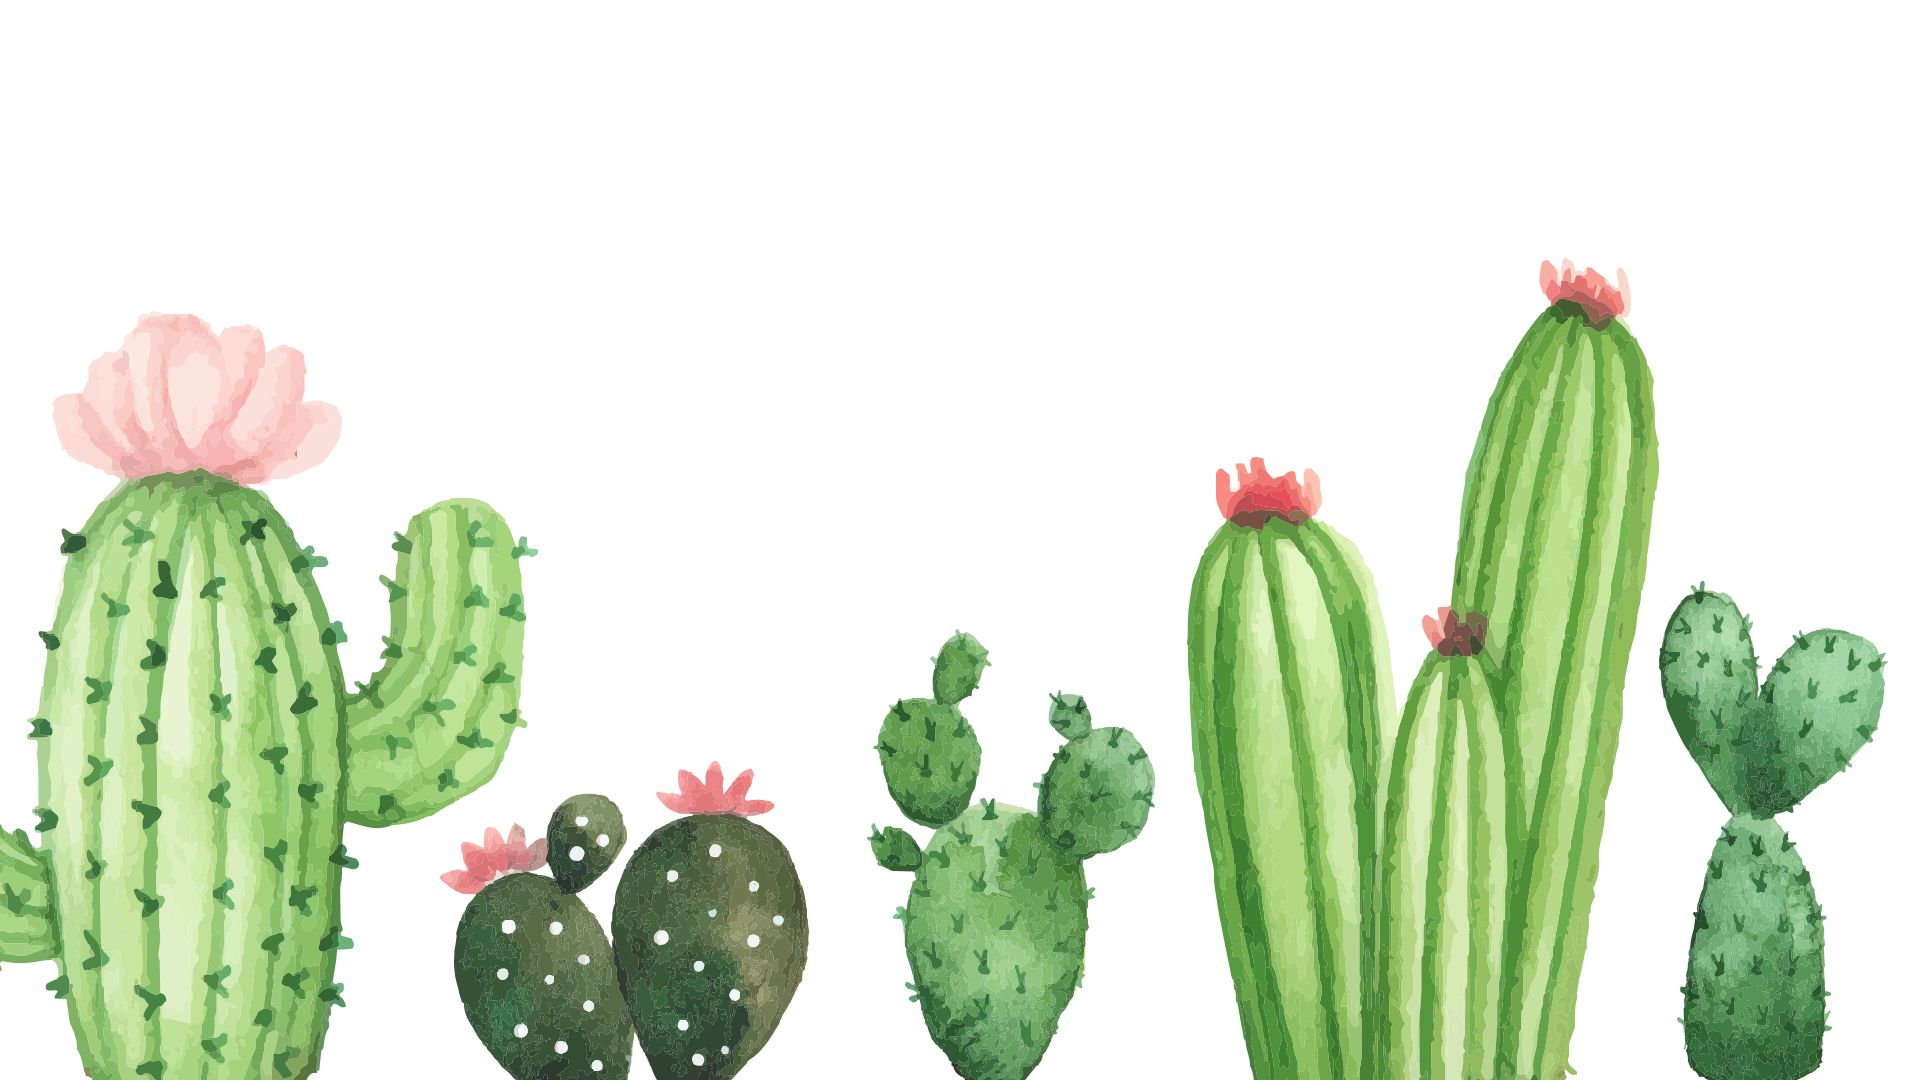 Download Cactus Wallpaper For Puter Desktop By Tvincent Cactus Backgrounds Cactus